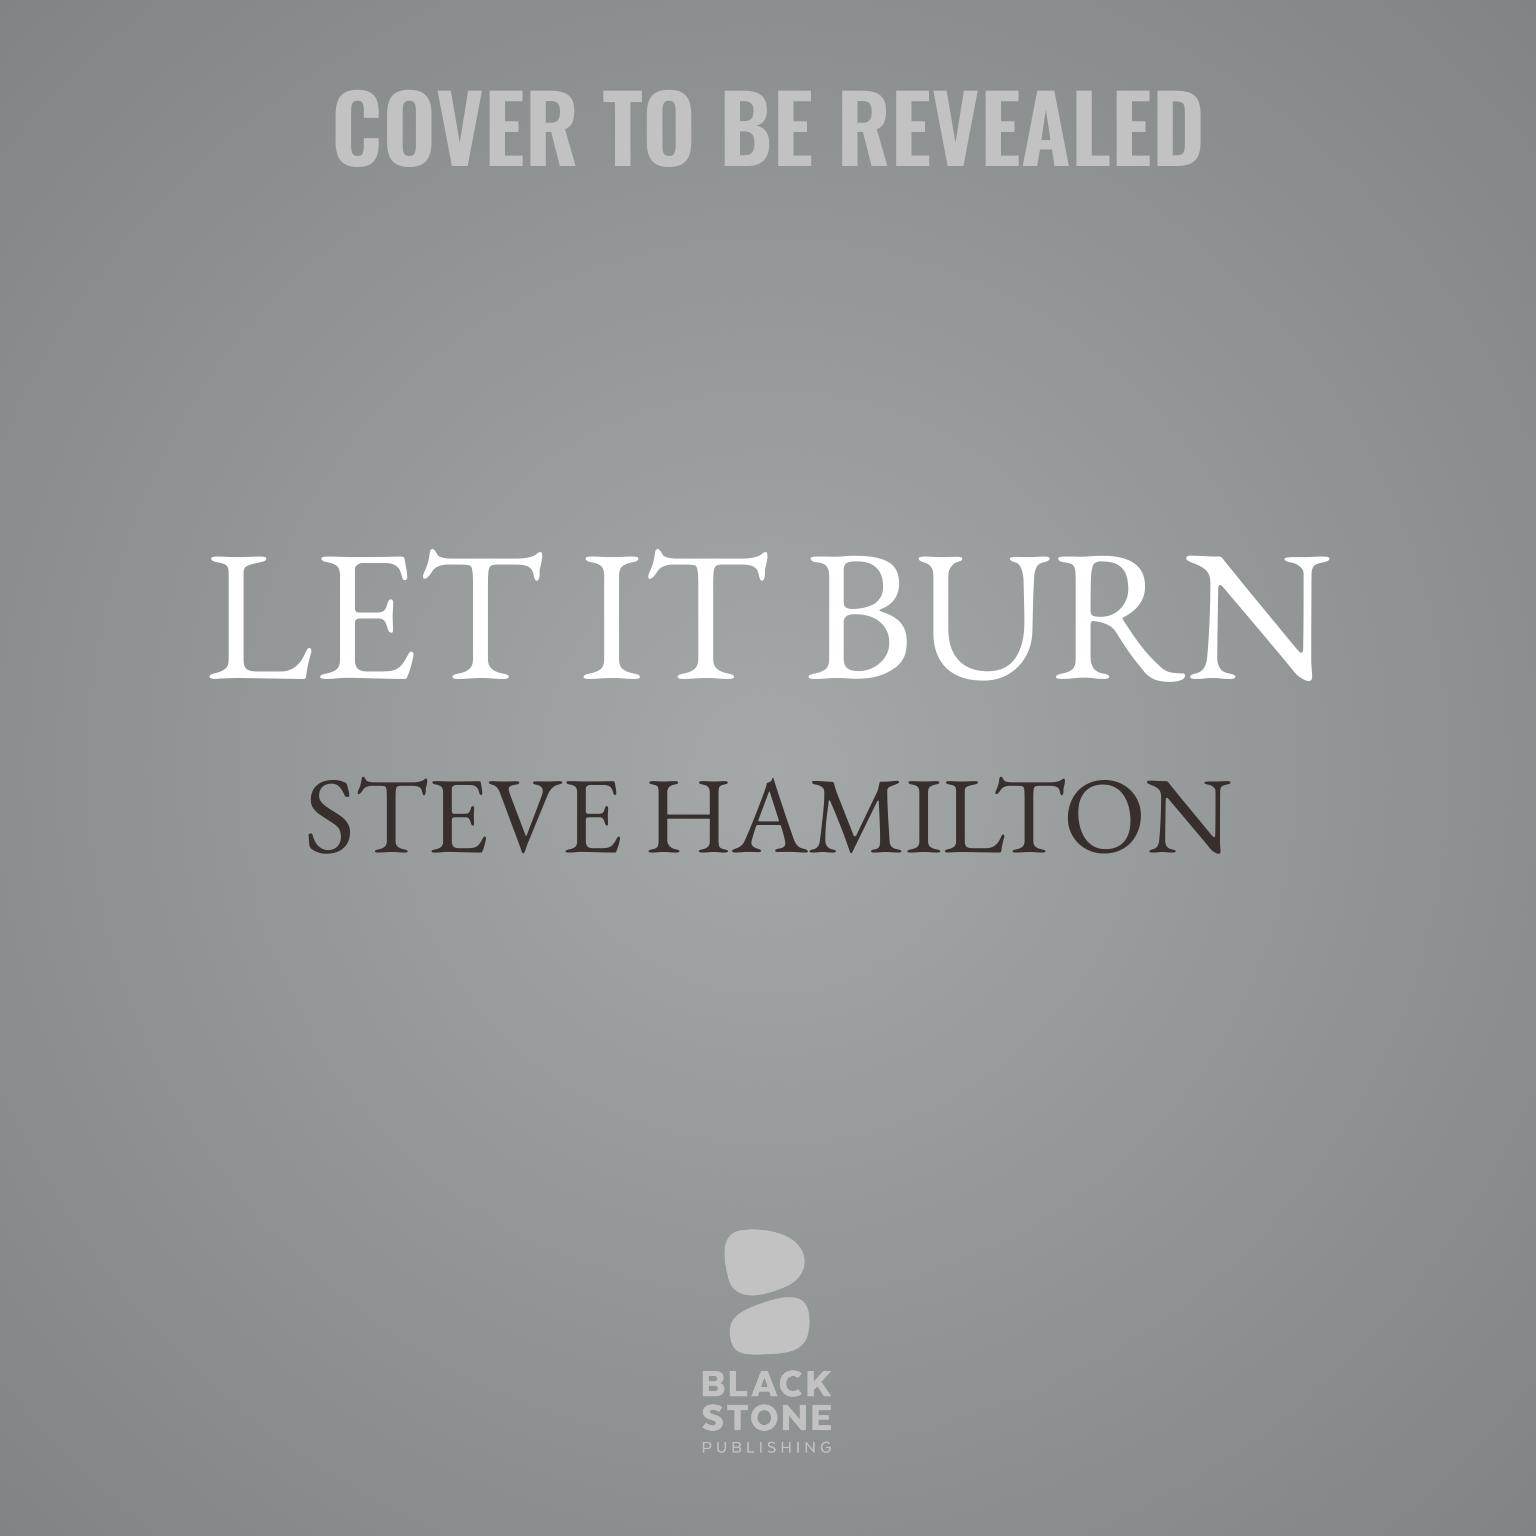 Let It Burn Audiobook, by Steve Hamilton